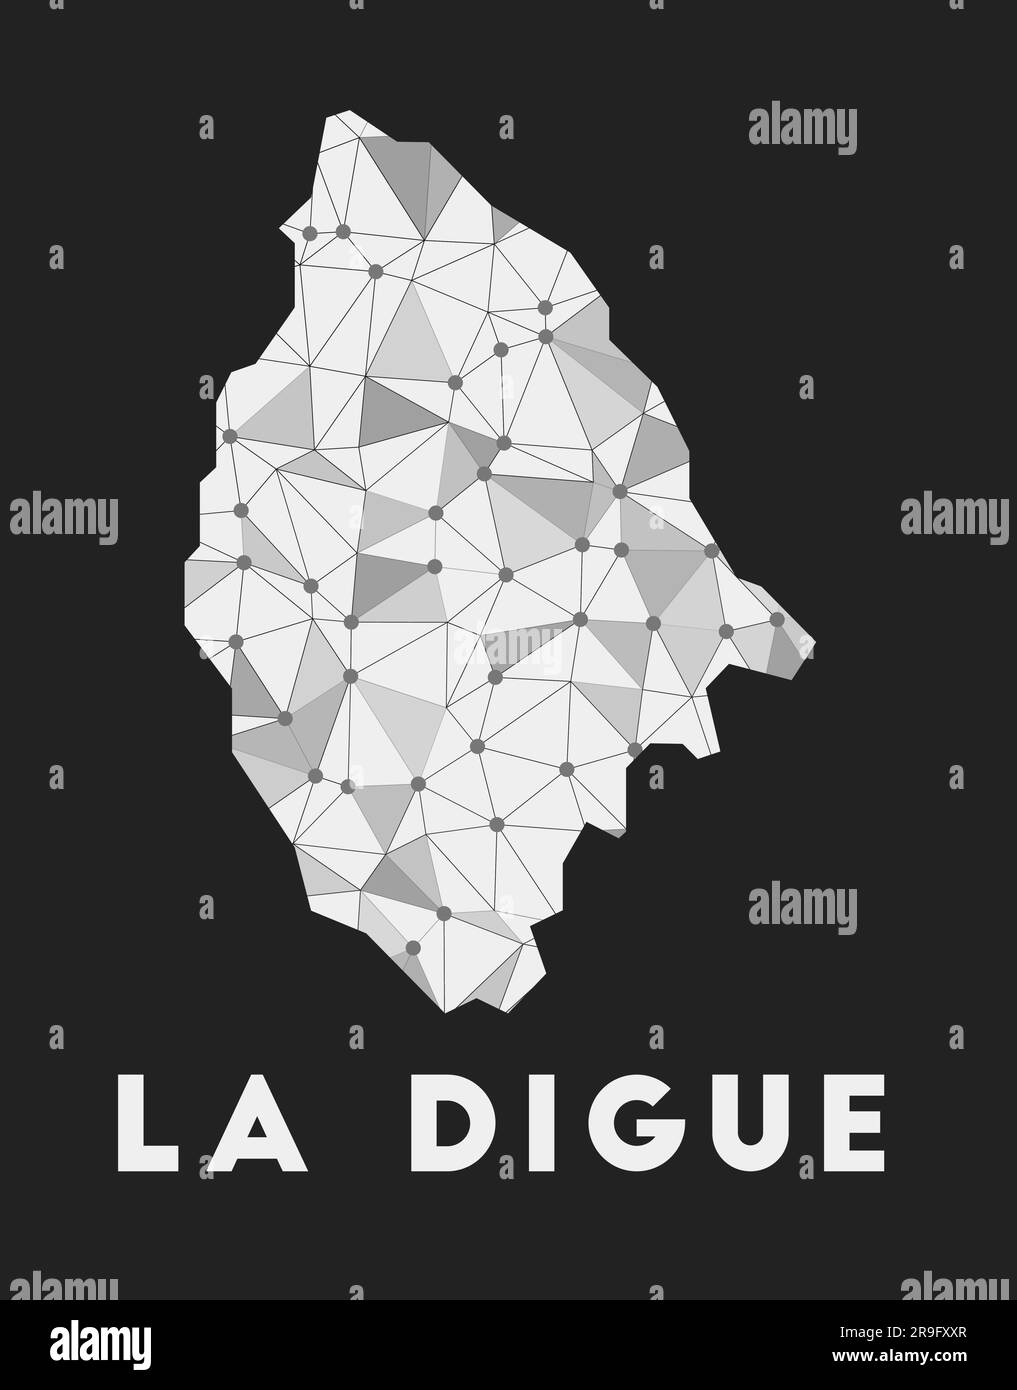 La Digue - communication network map of island. La Digue trendy ...